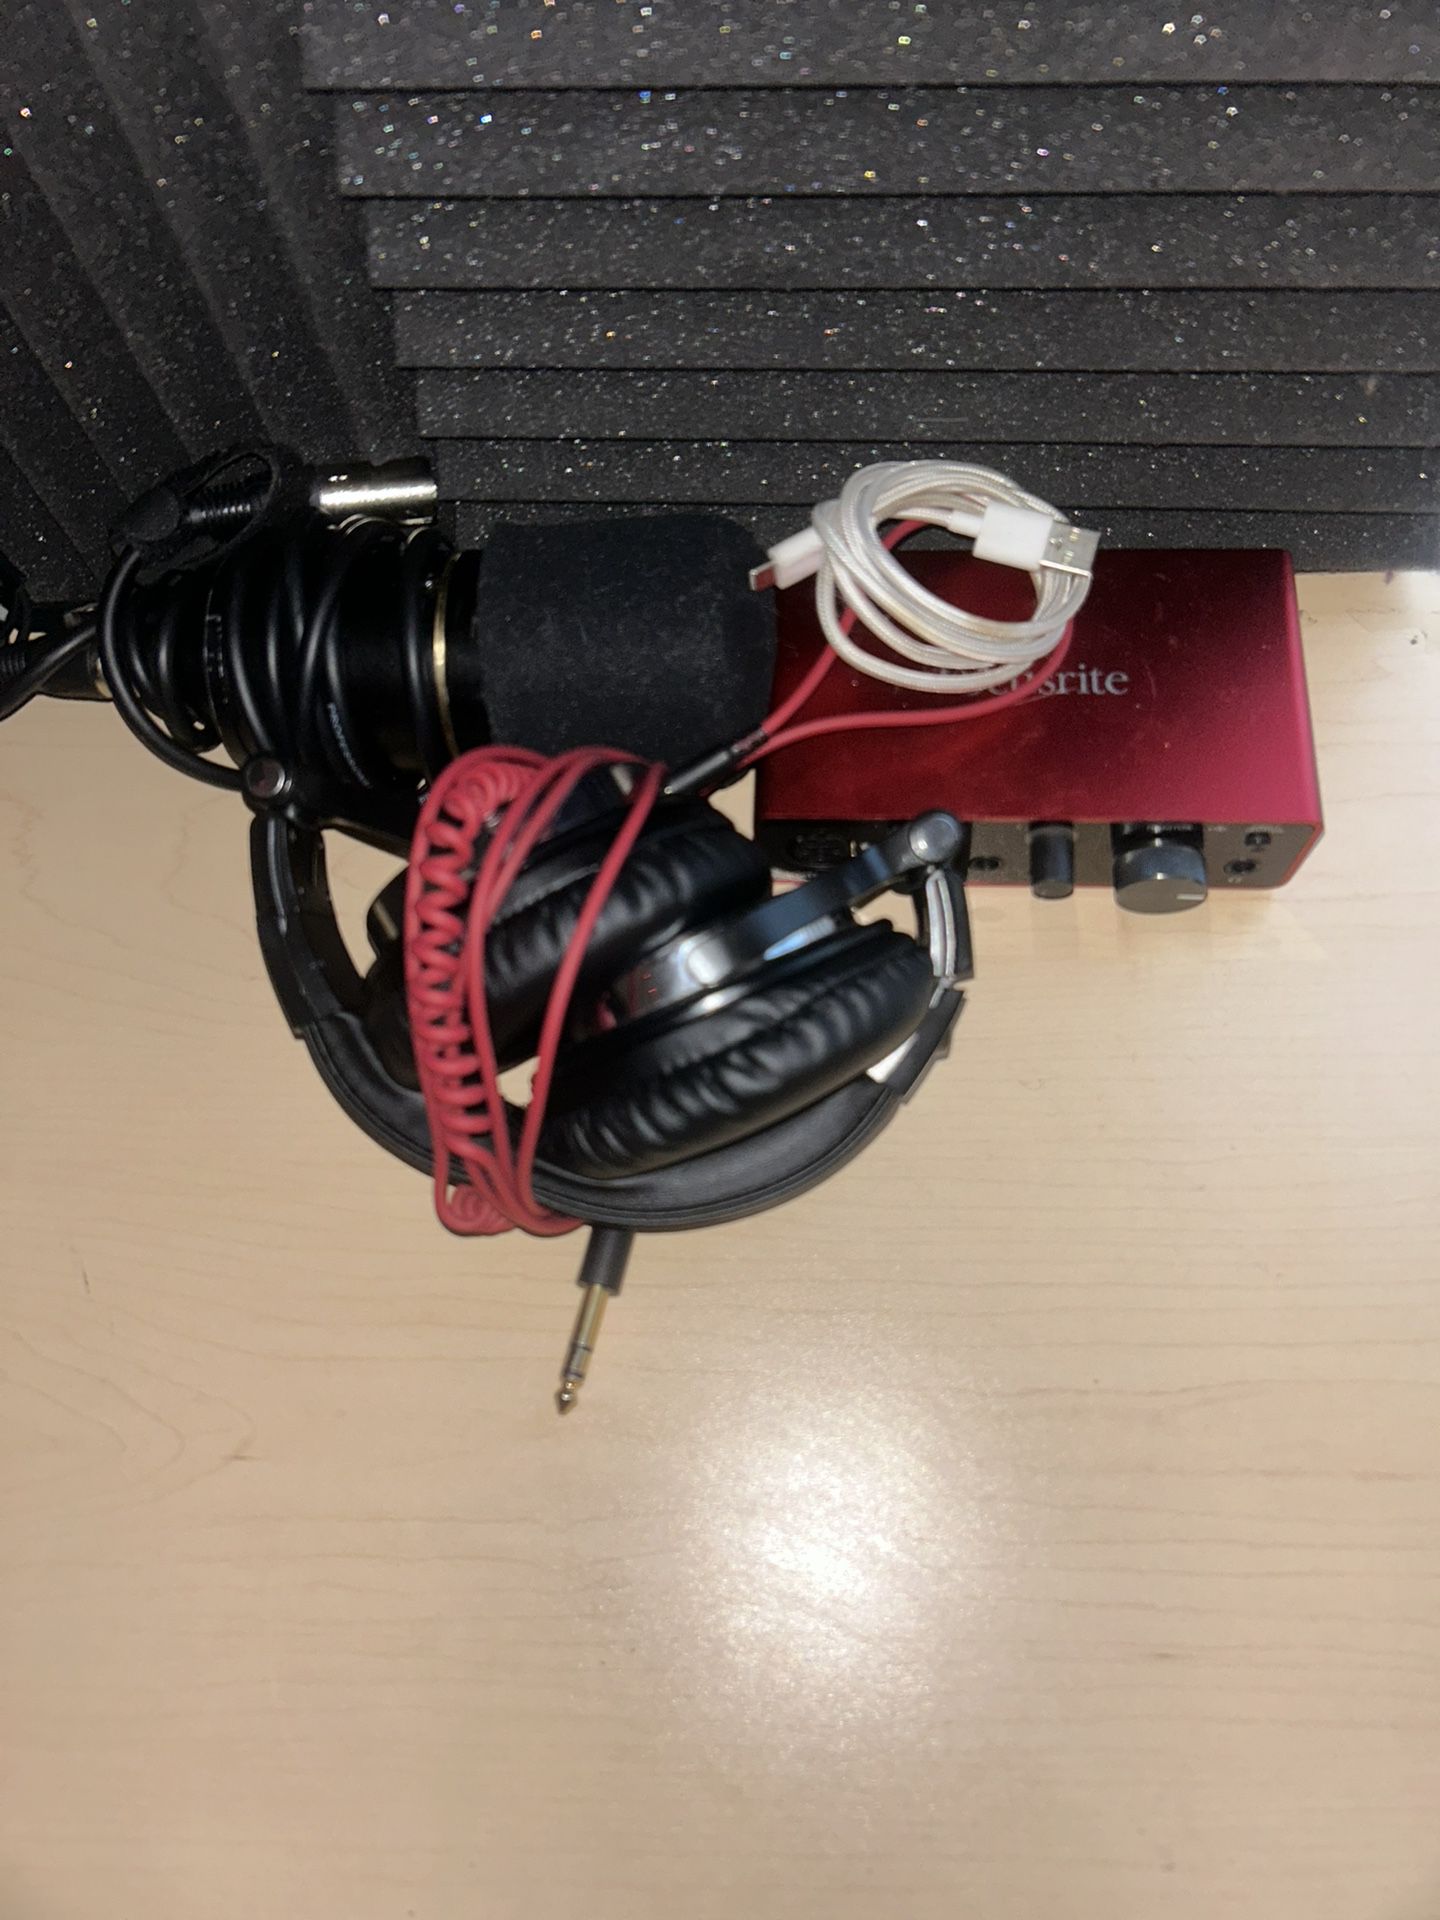 Mic, Studio Headphones, Audio Mixer 3-1